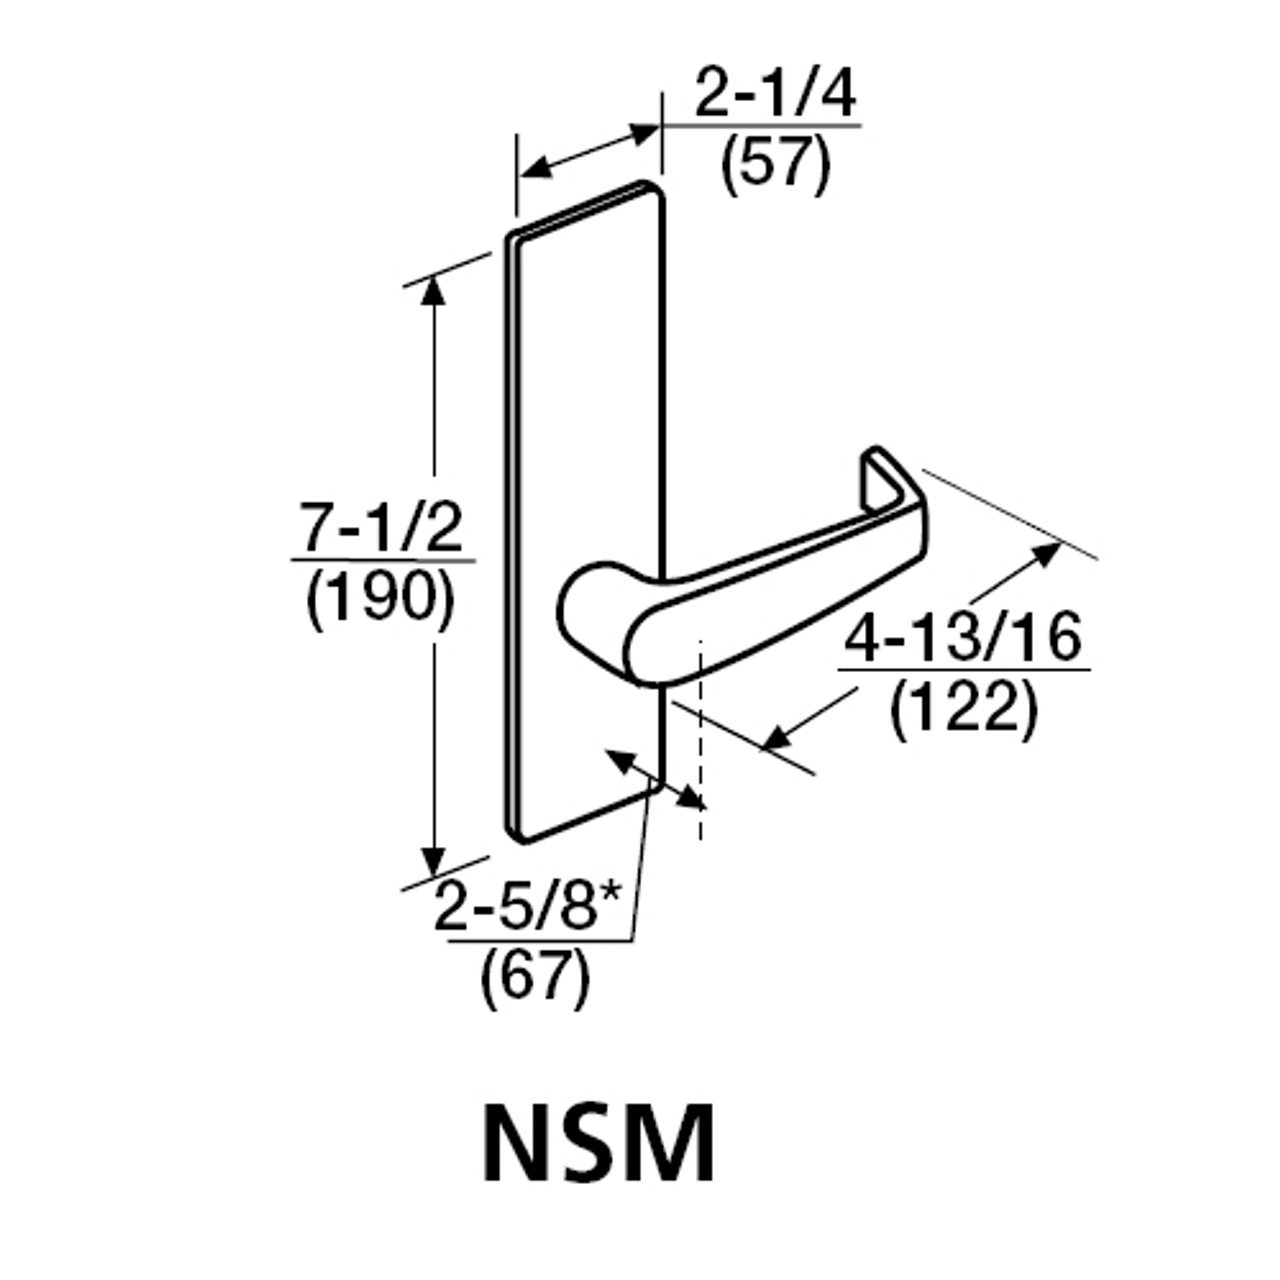 ML2058-NSM-606-LC Corbin Russwin ML2000 Series Mortise Entrance Holdback Locksets with Newport Lever in Satin Brass